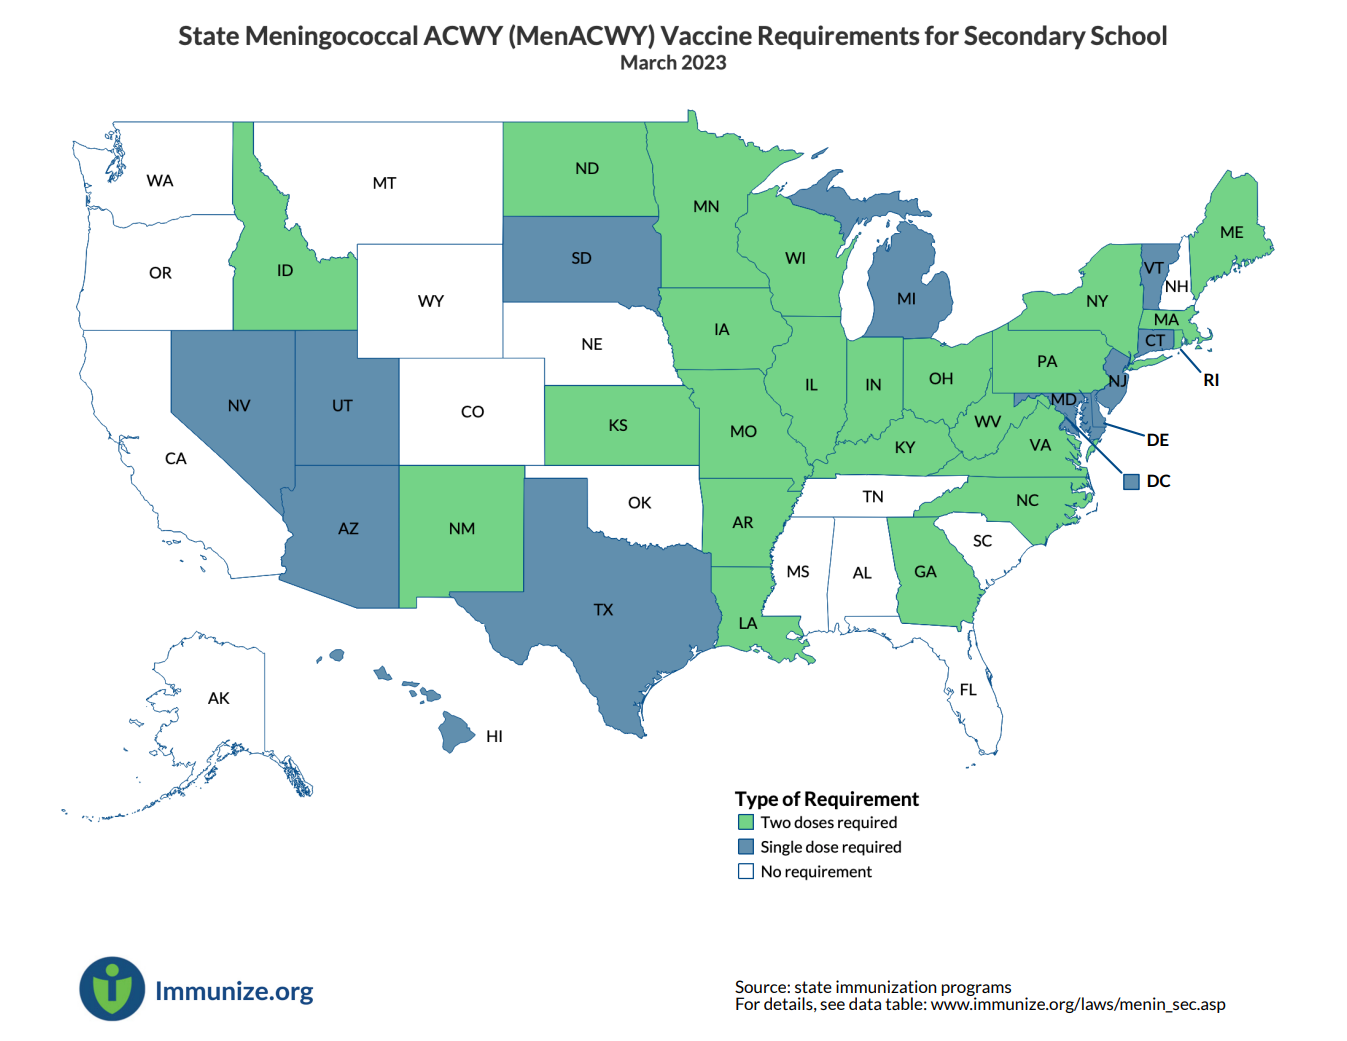 Thousands could miss school over mandatory meningitis vaccination